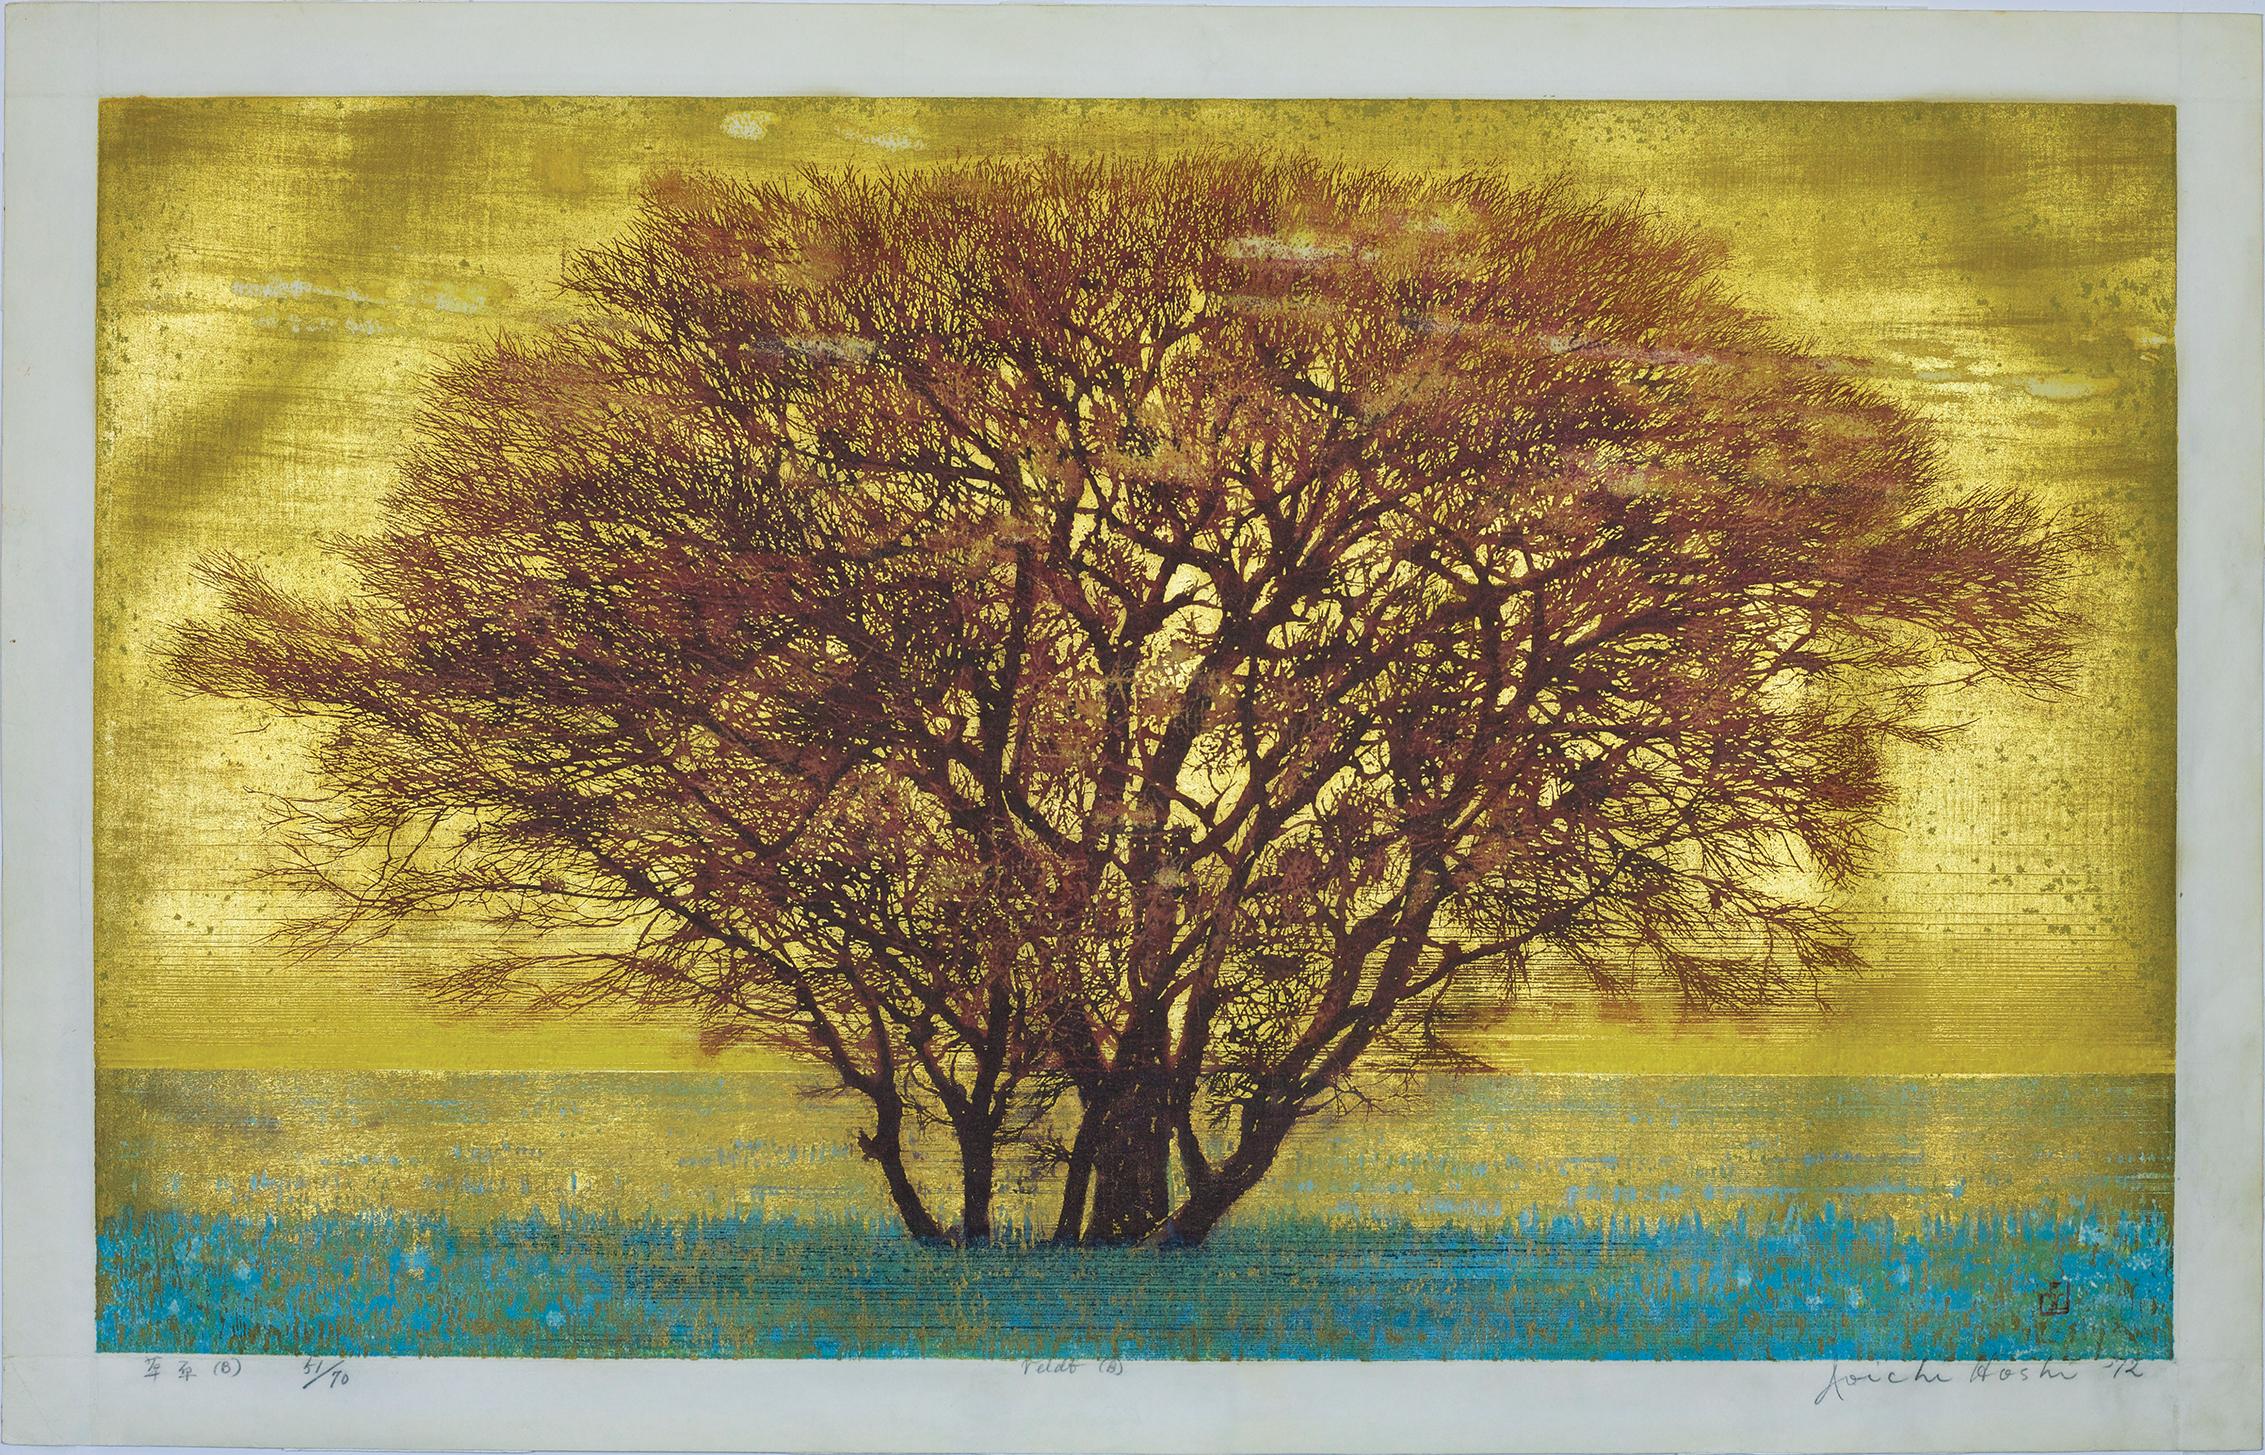 Massive Red Tree Against Golden Ground: Green Field (Veldt) (B) - Print by Joichi Hoshi